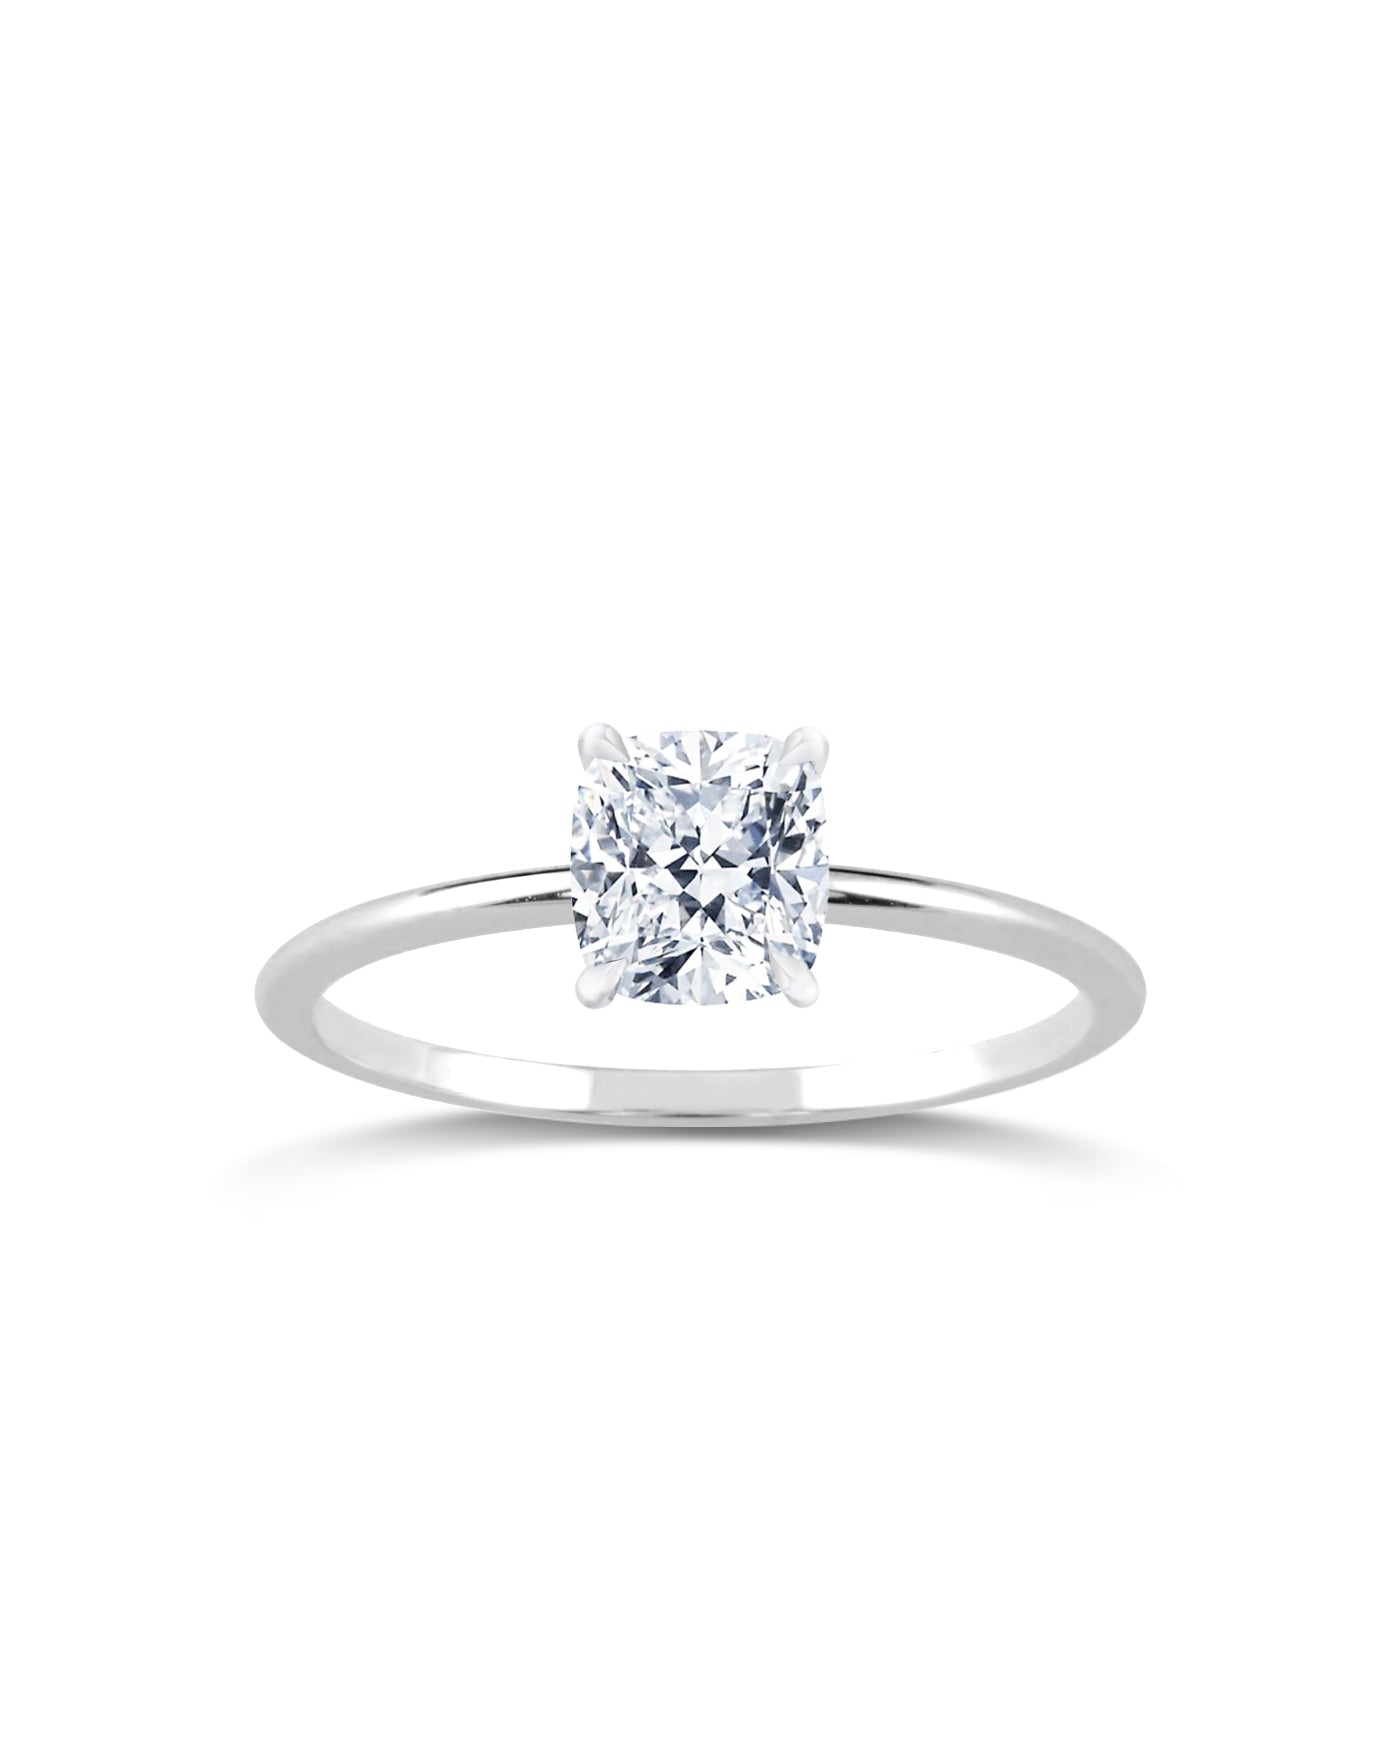 Solitaire Ring | Cushion Cut 1ct LAB Diamond